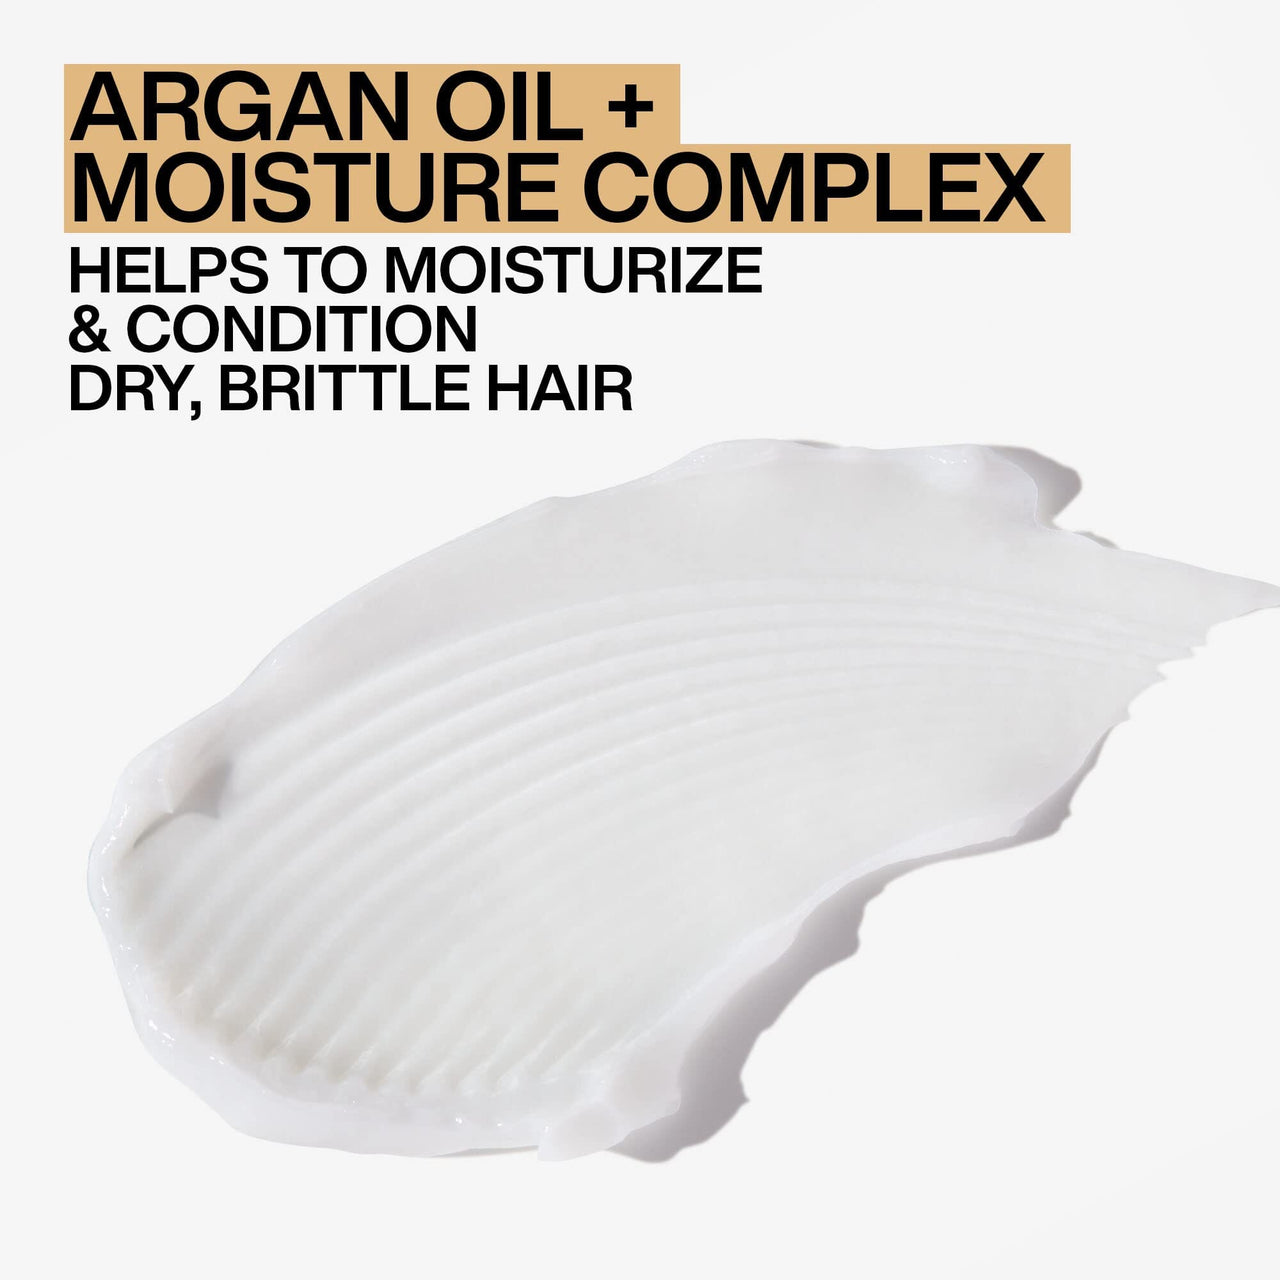 Redken Redken All Soft Conditioner | For Dry / Brittle Hair